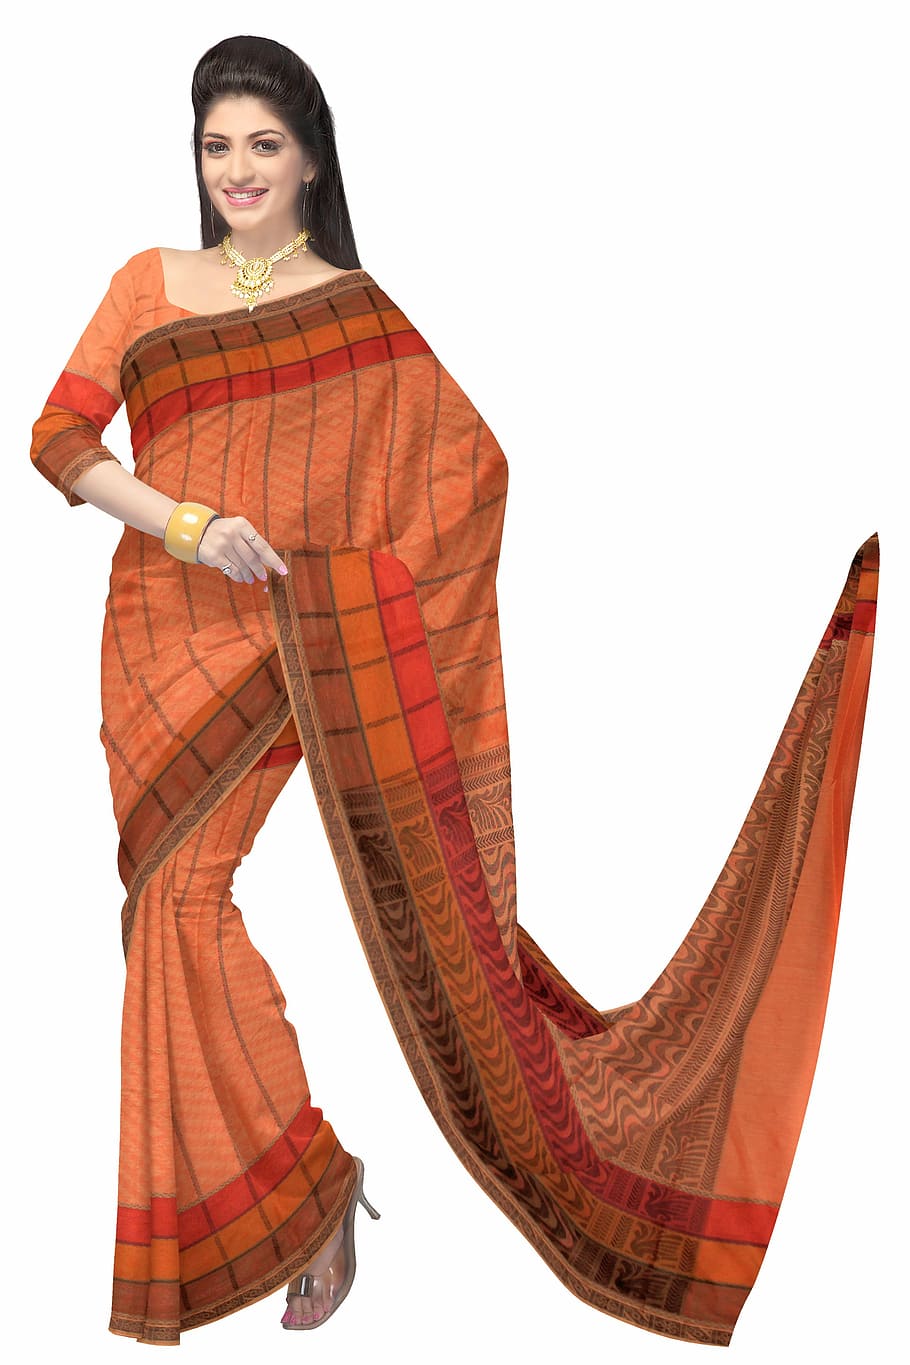 sari, indian clothing, fashion, silk, dress, woman, model, clothing, indian, cotton